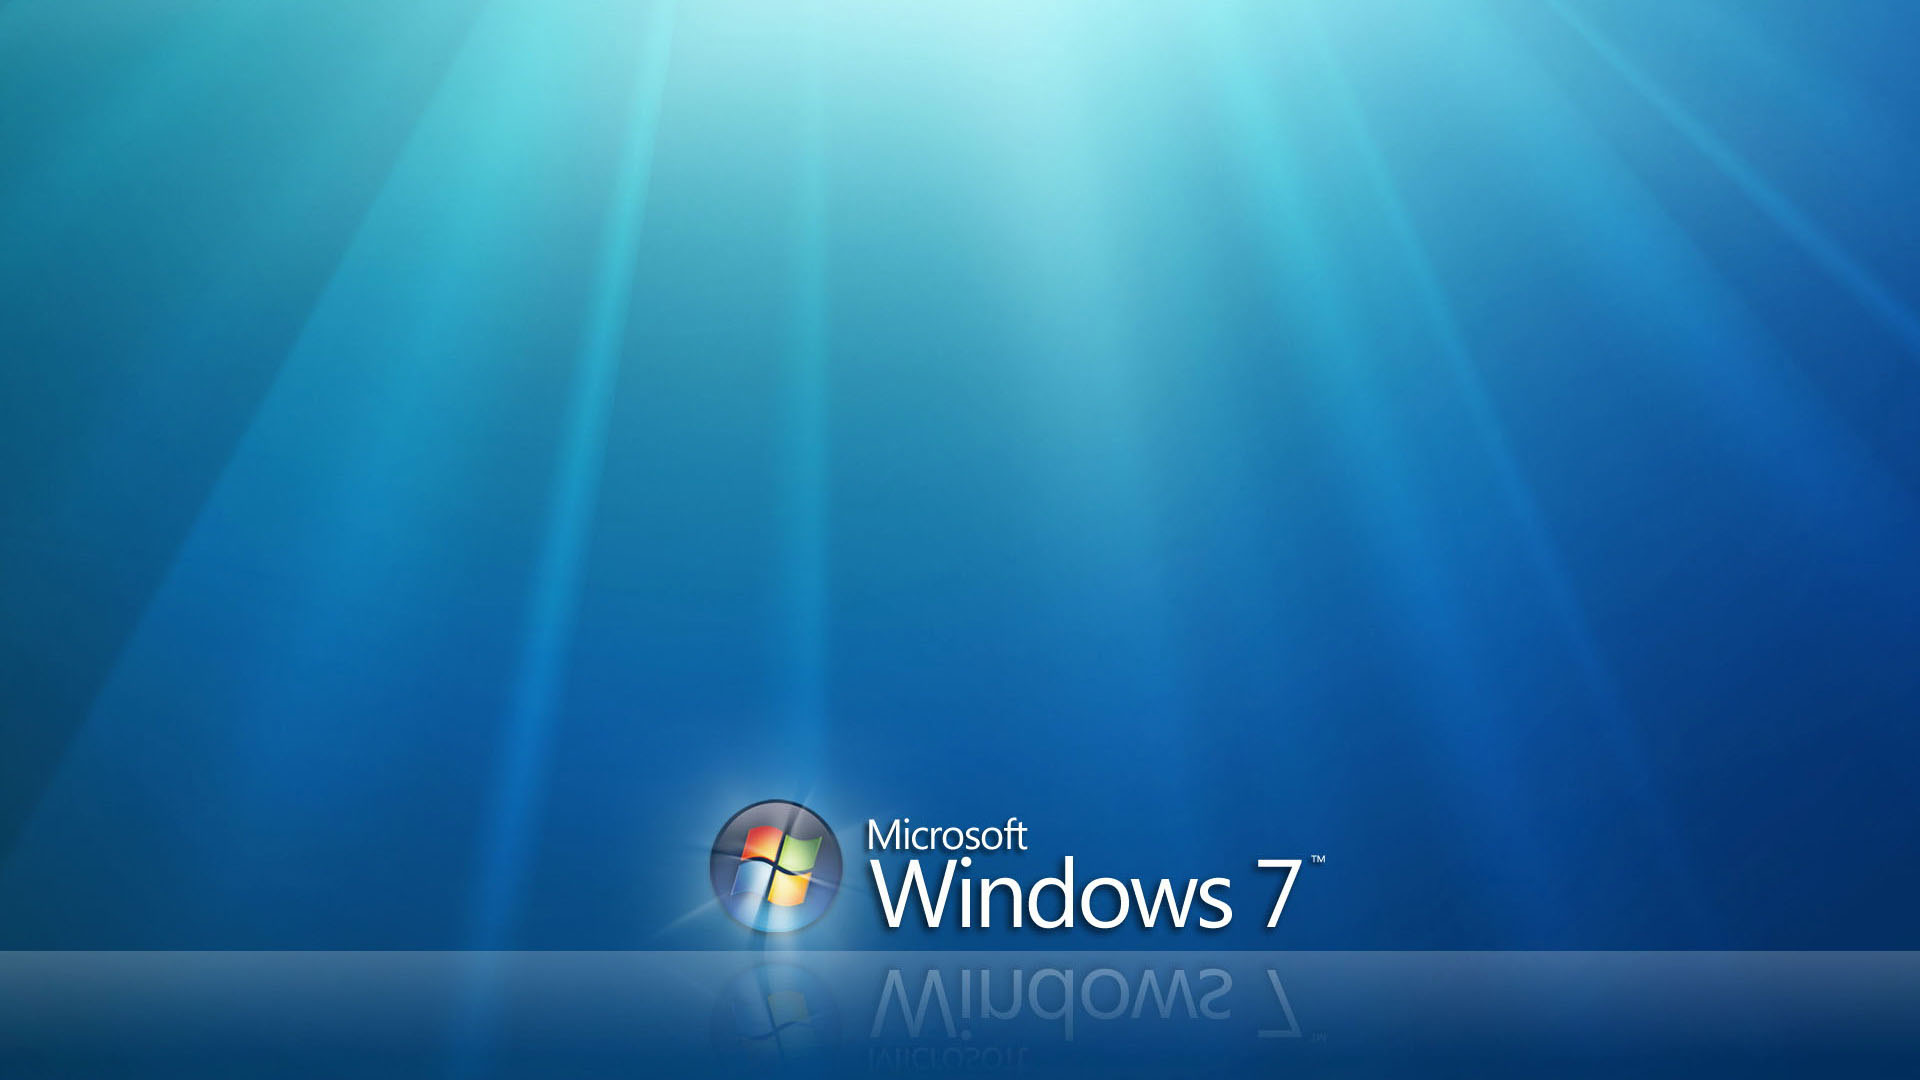 Microsoft Windows 7 Home Premium, Ultimate New Wallpaper